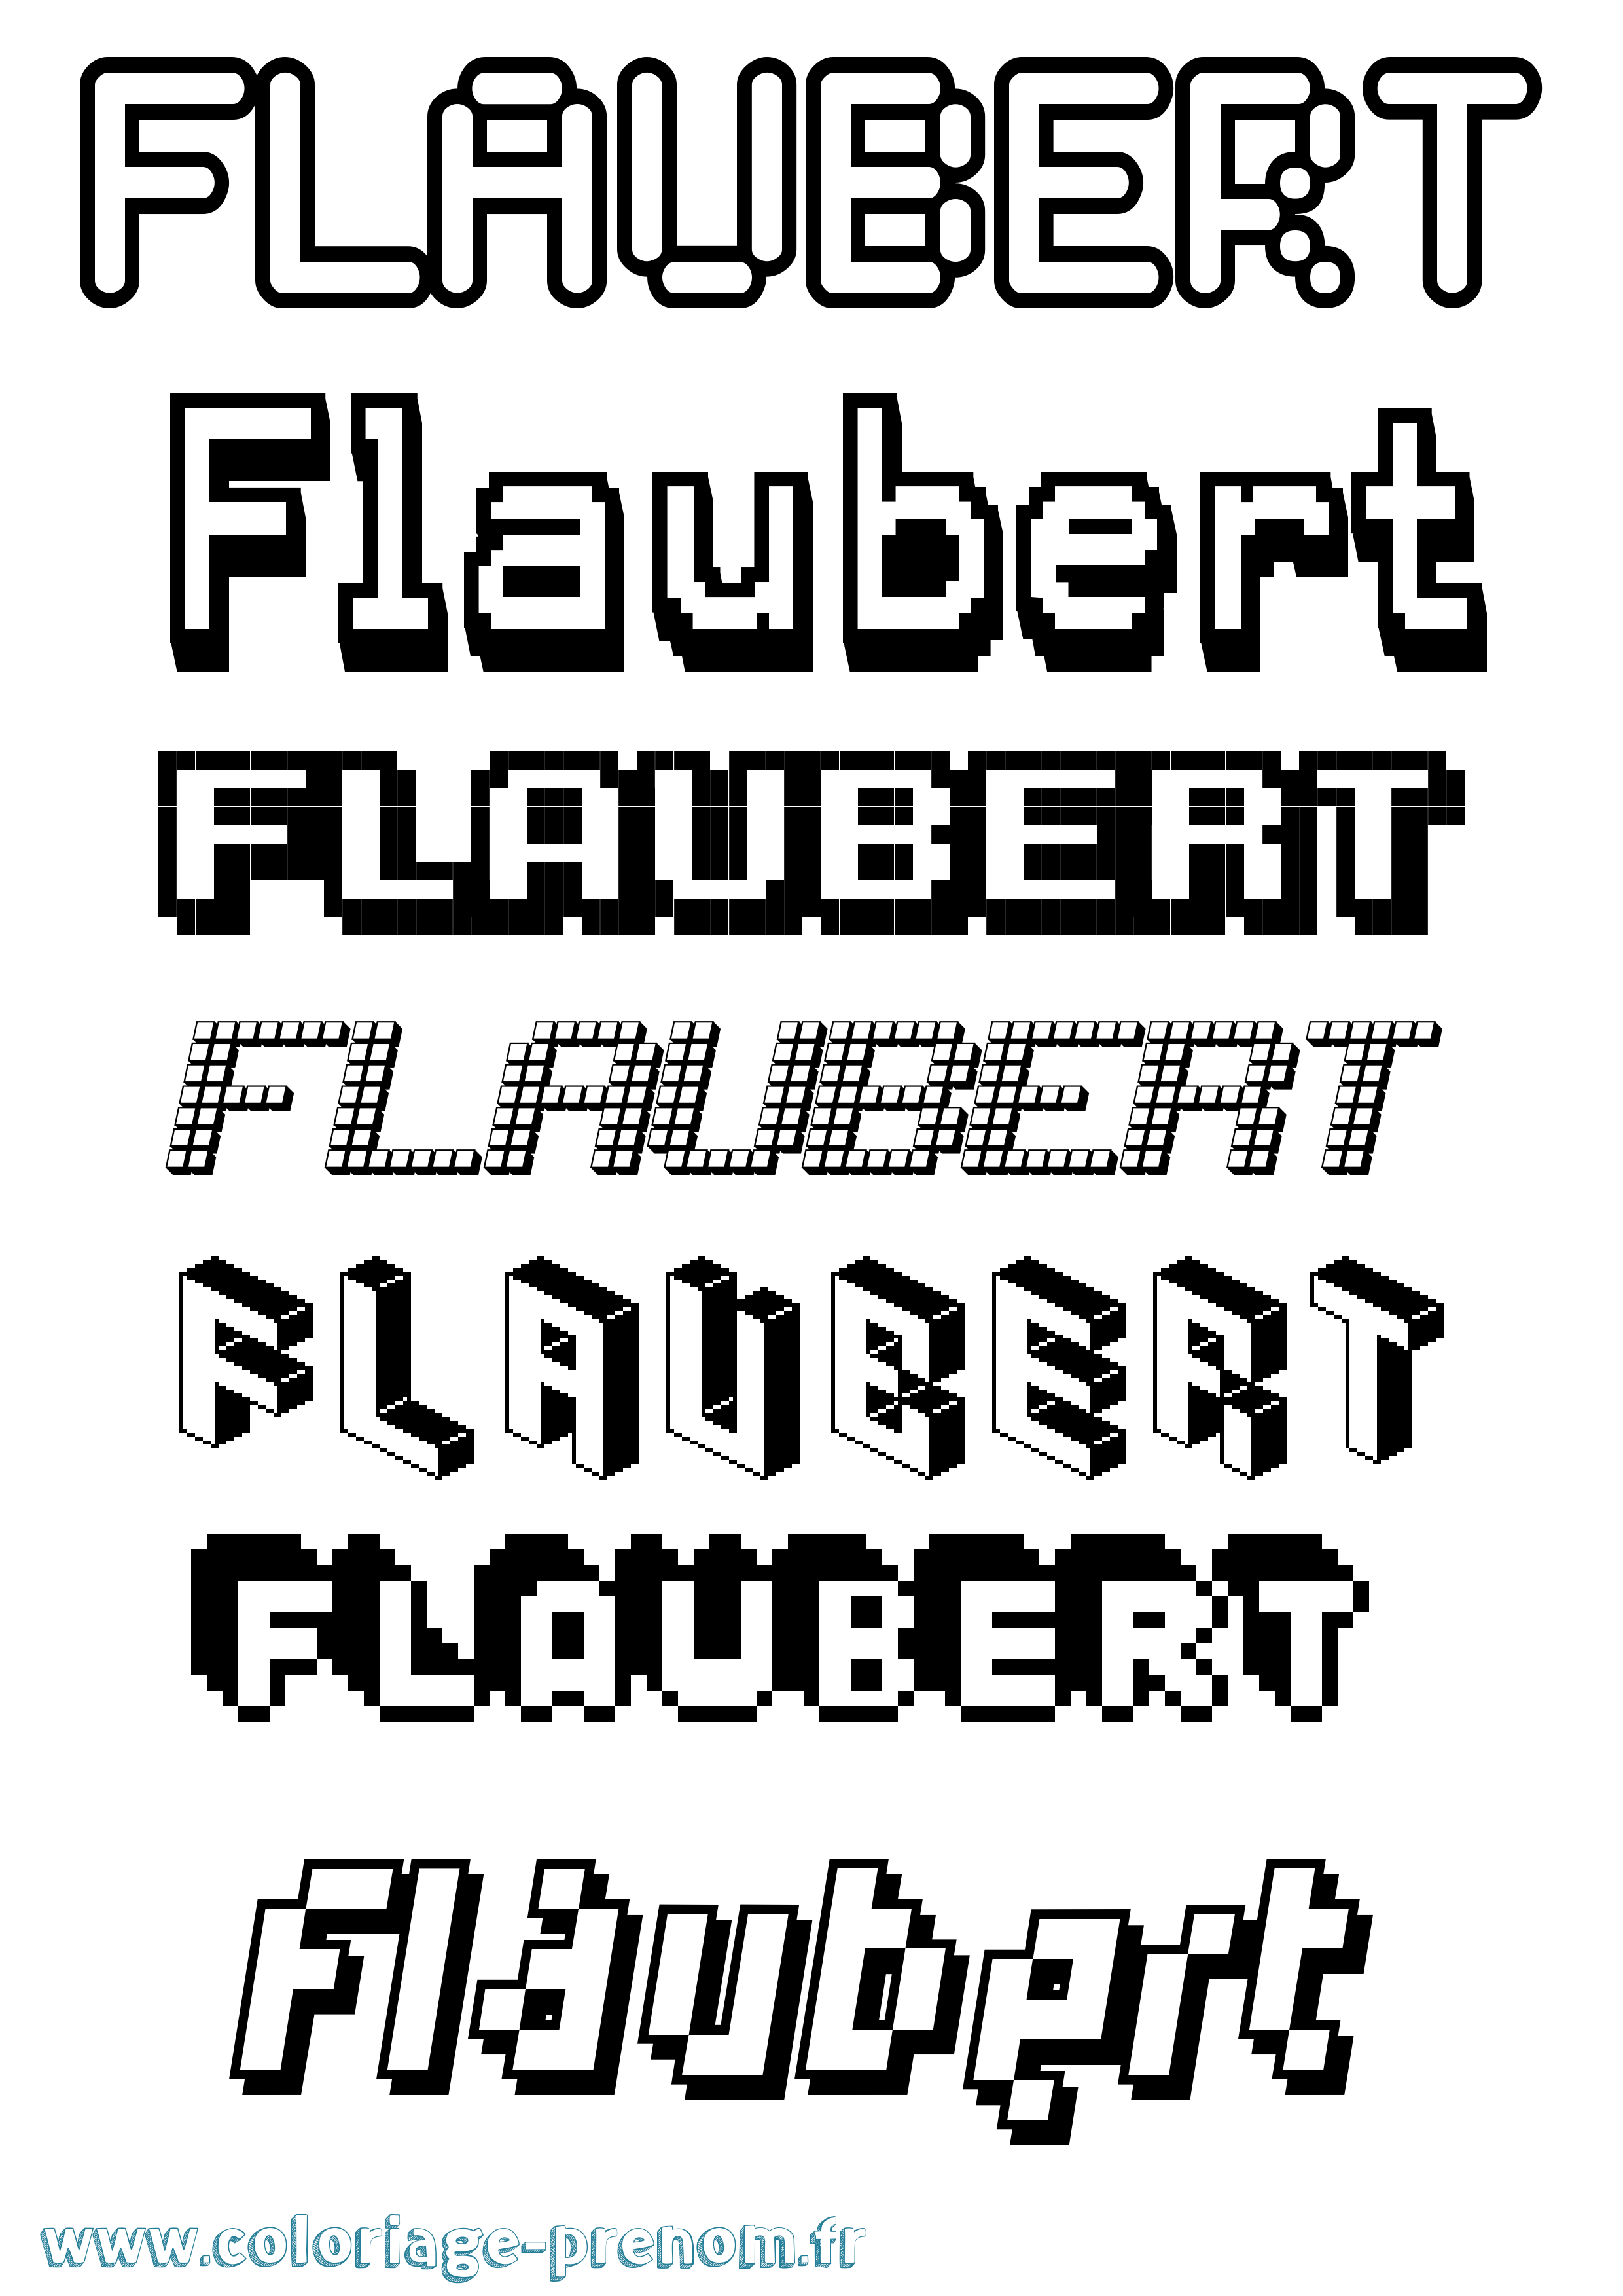 Coloriage prénom Flaubert Pixel